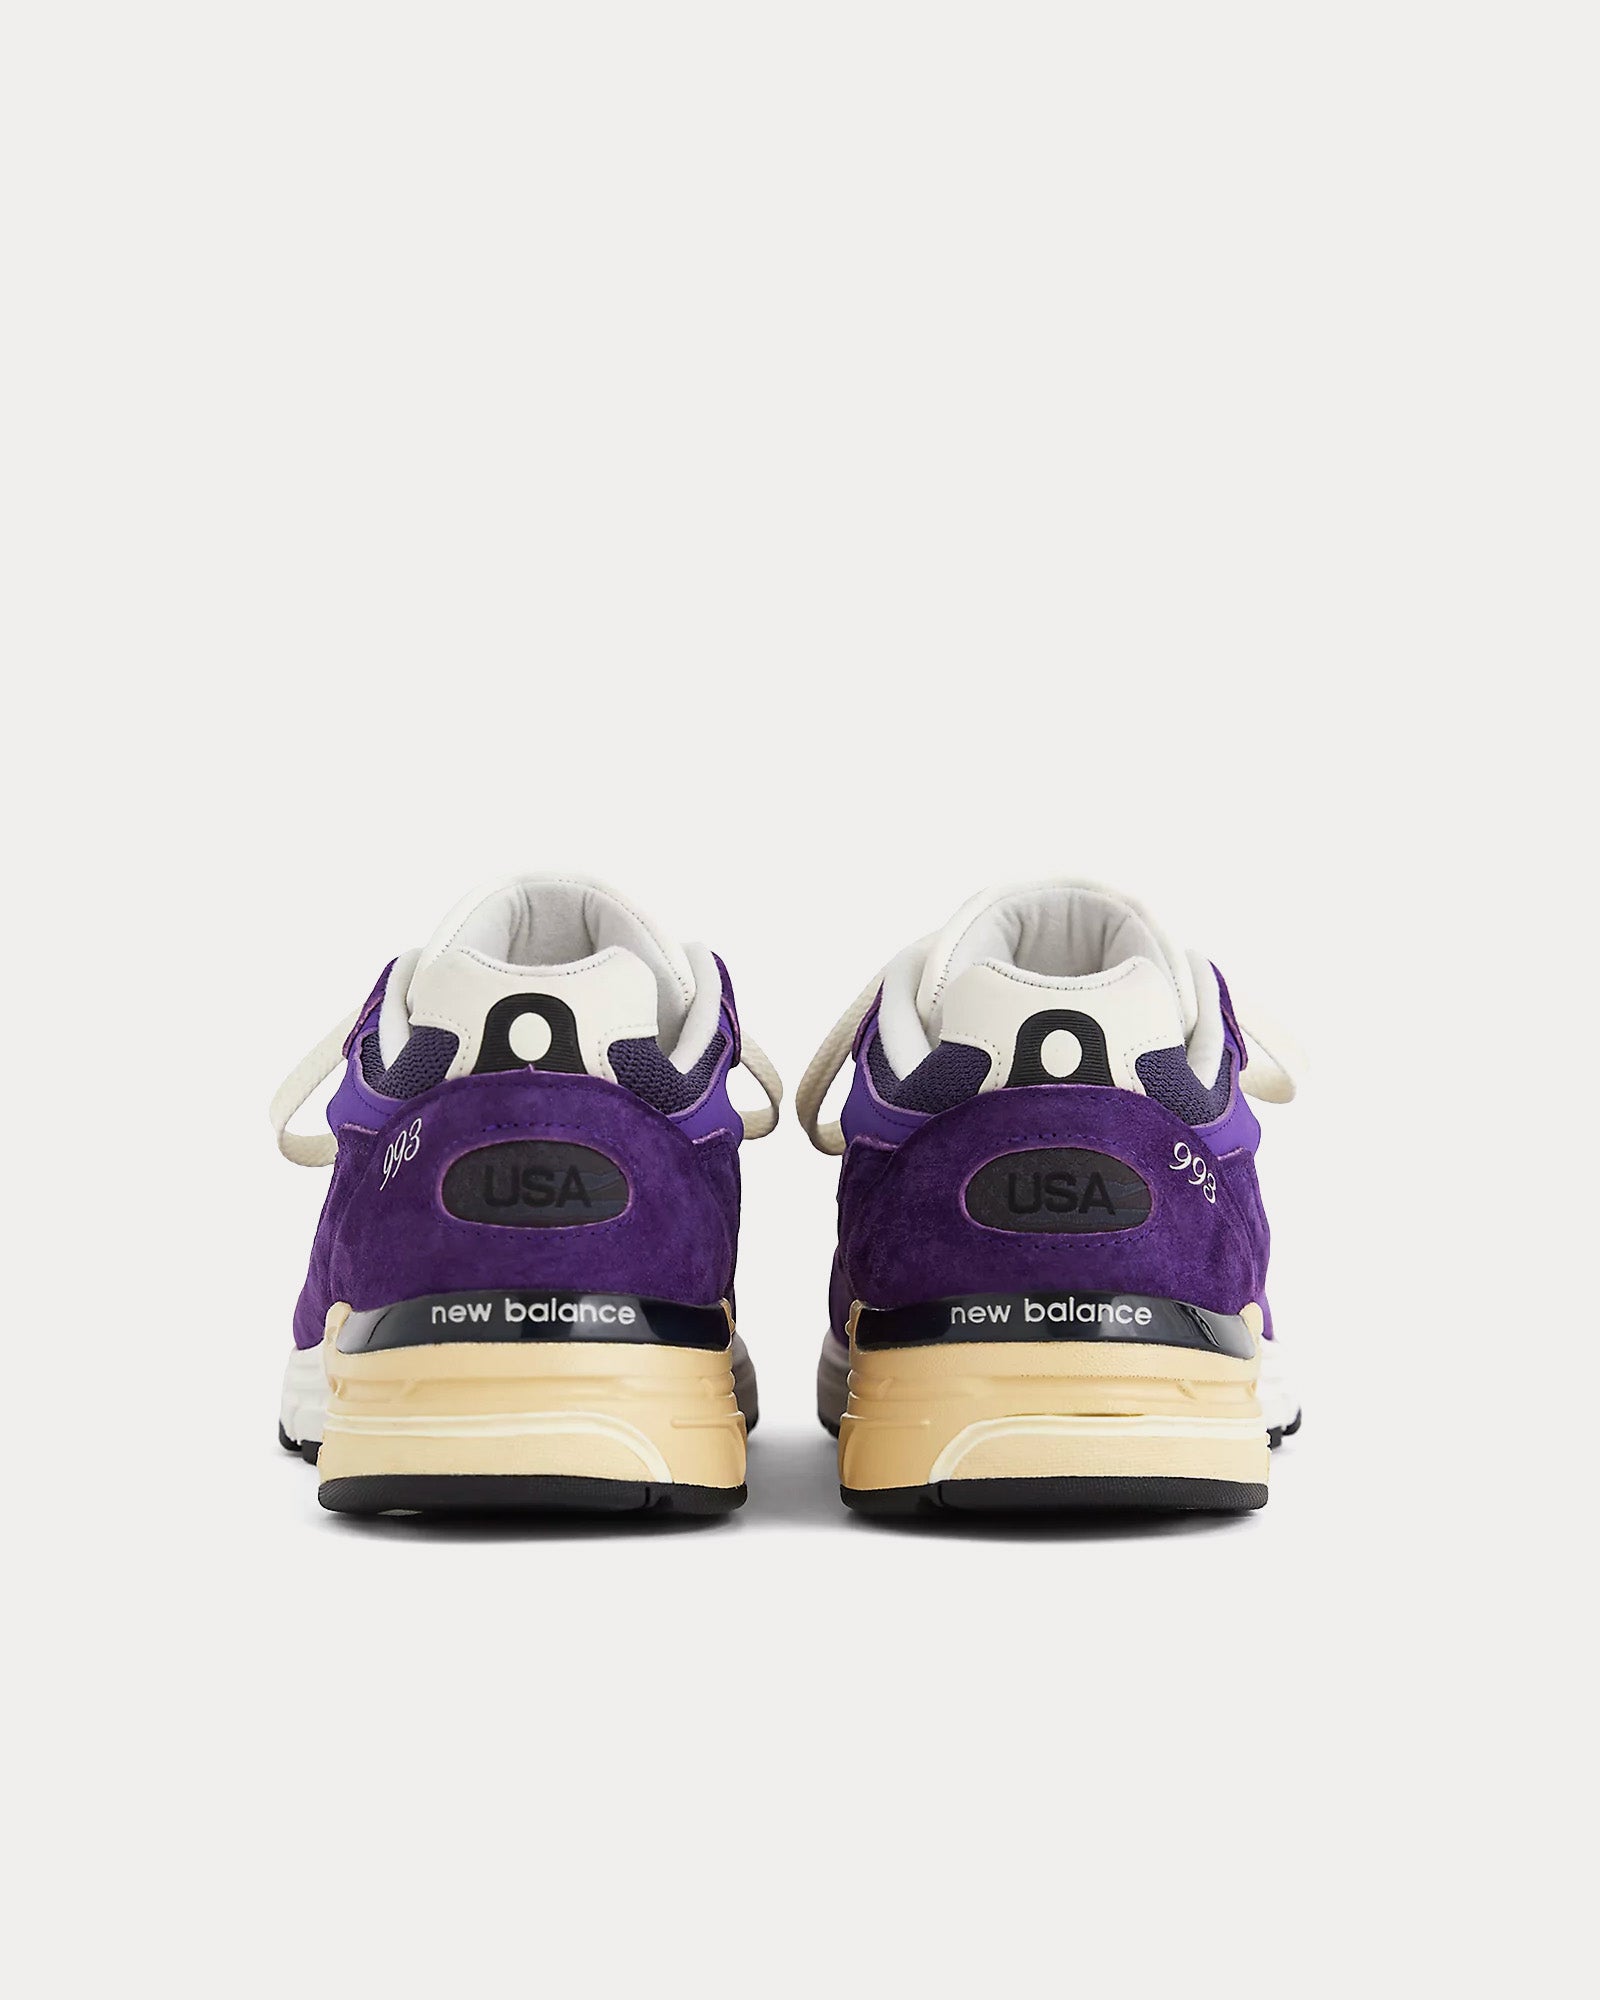 New Balance - Made in USA 993 Purple / Dark Mercury Low Top Sneakers